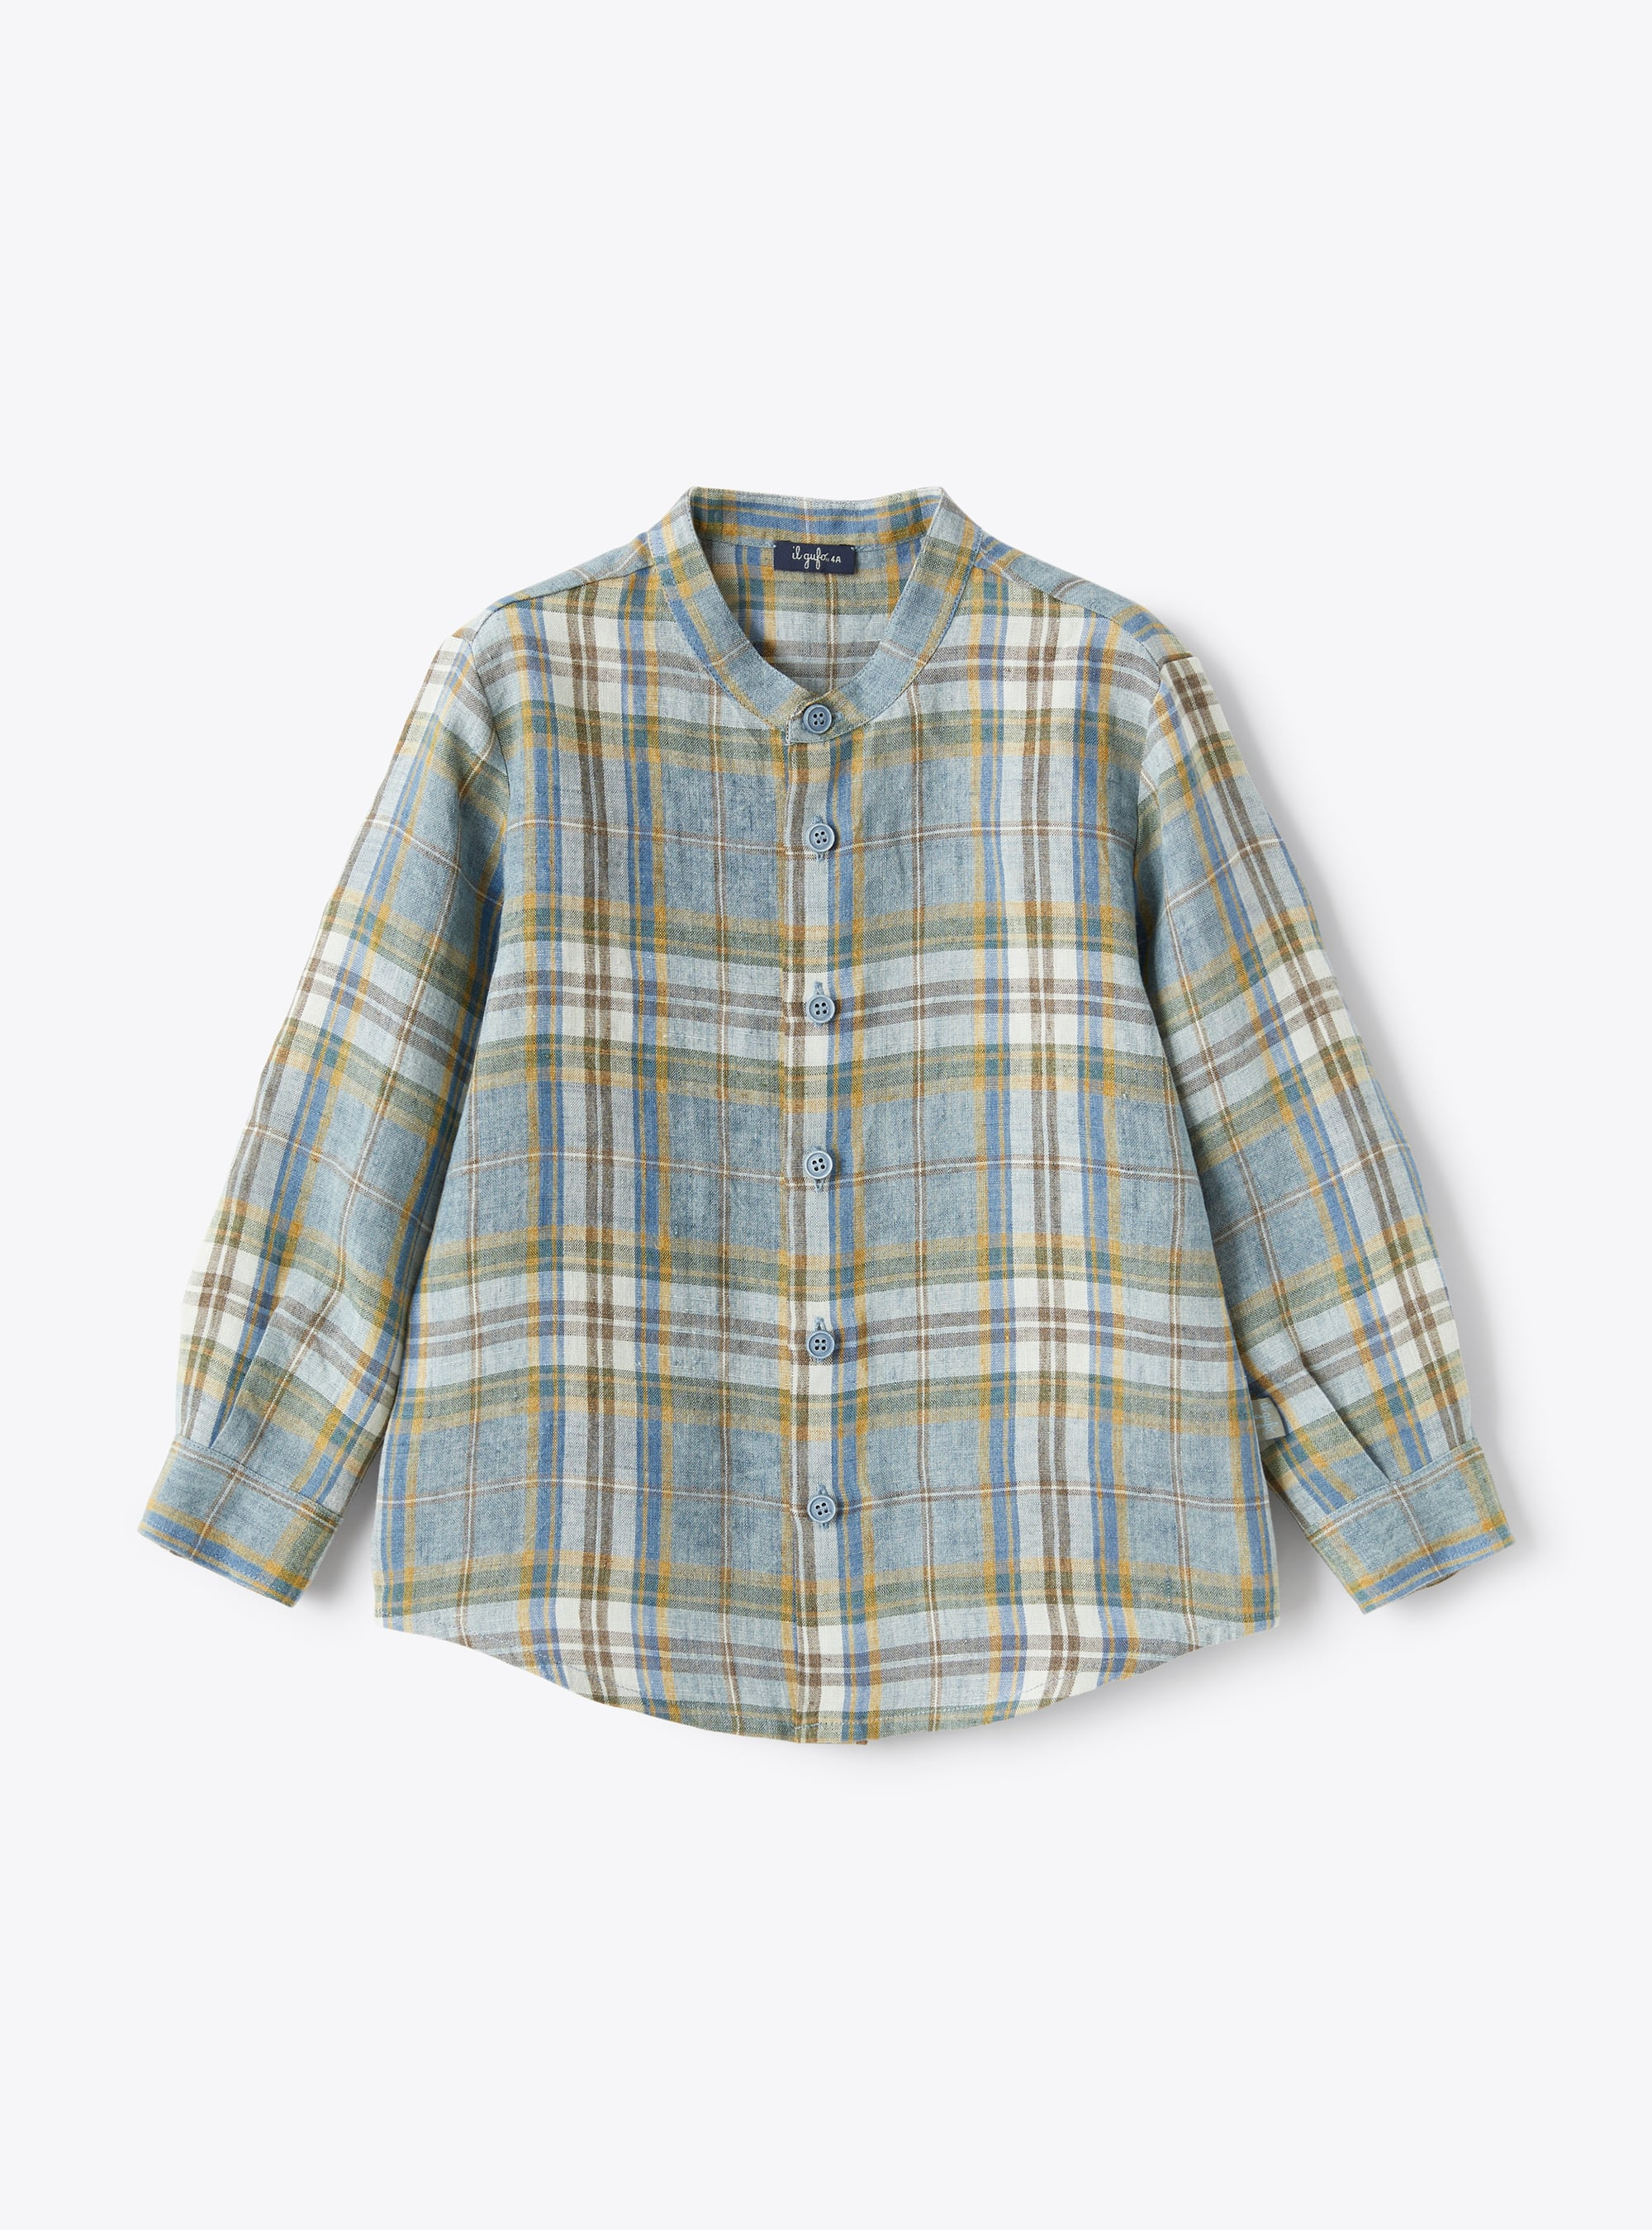 Mandarin-collar shirt in madras-patterned linen  - Shirts - Il Gufo